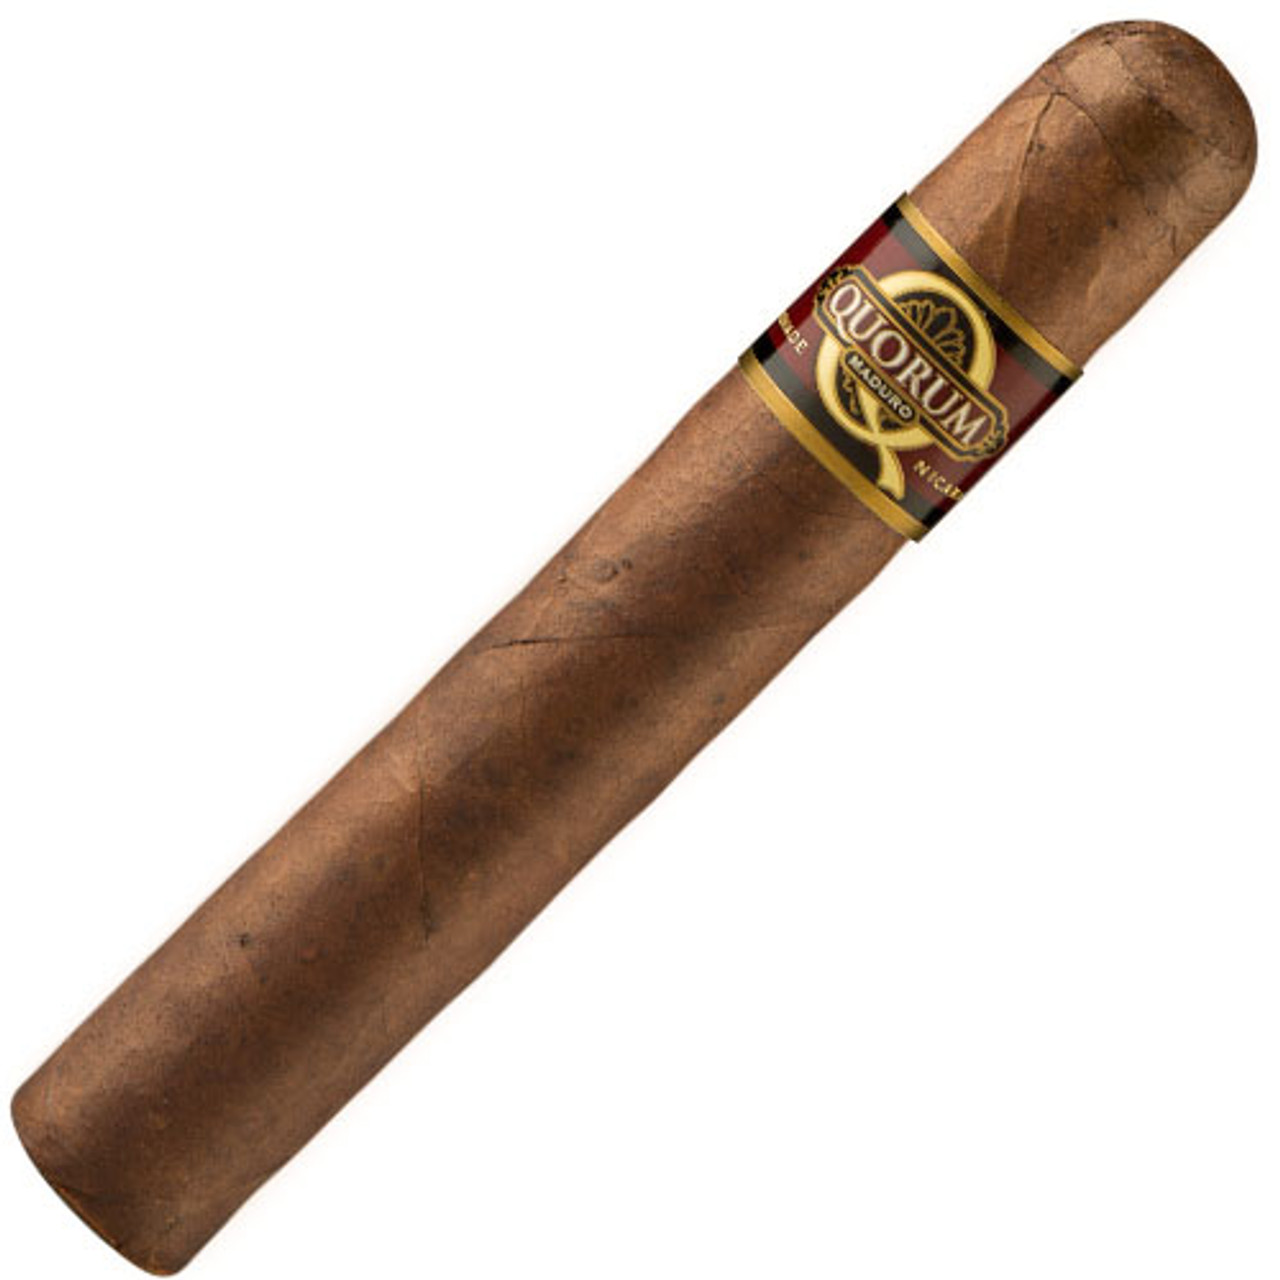 Quorum Maduro Double Gordo Cigars - 6 x 60 Single